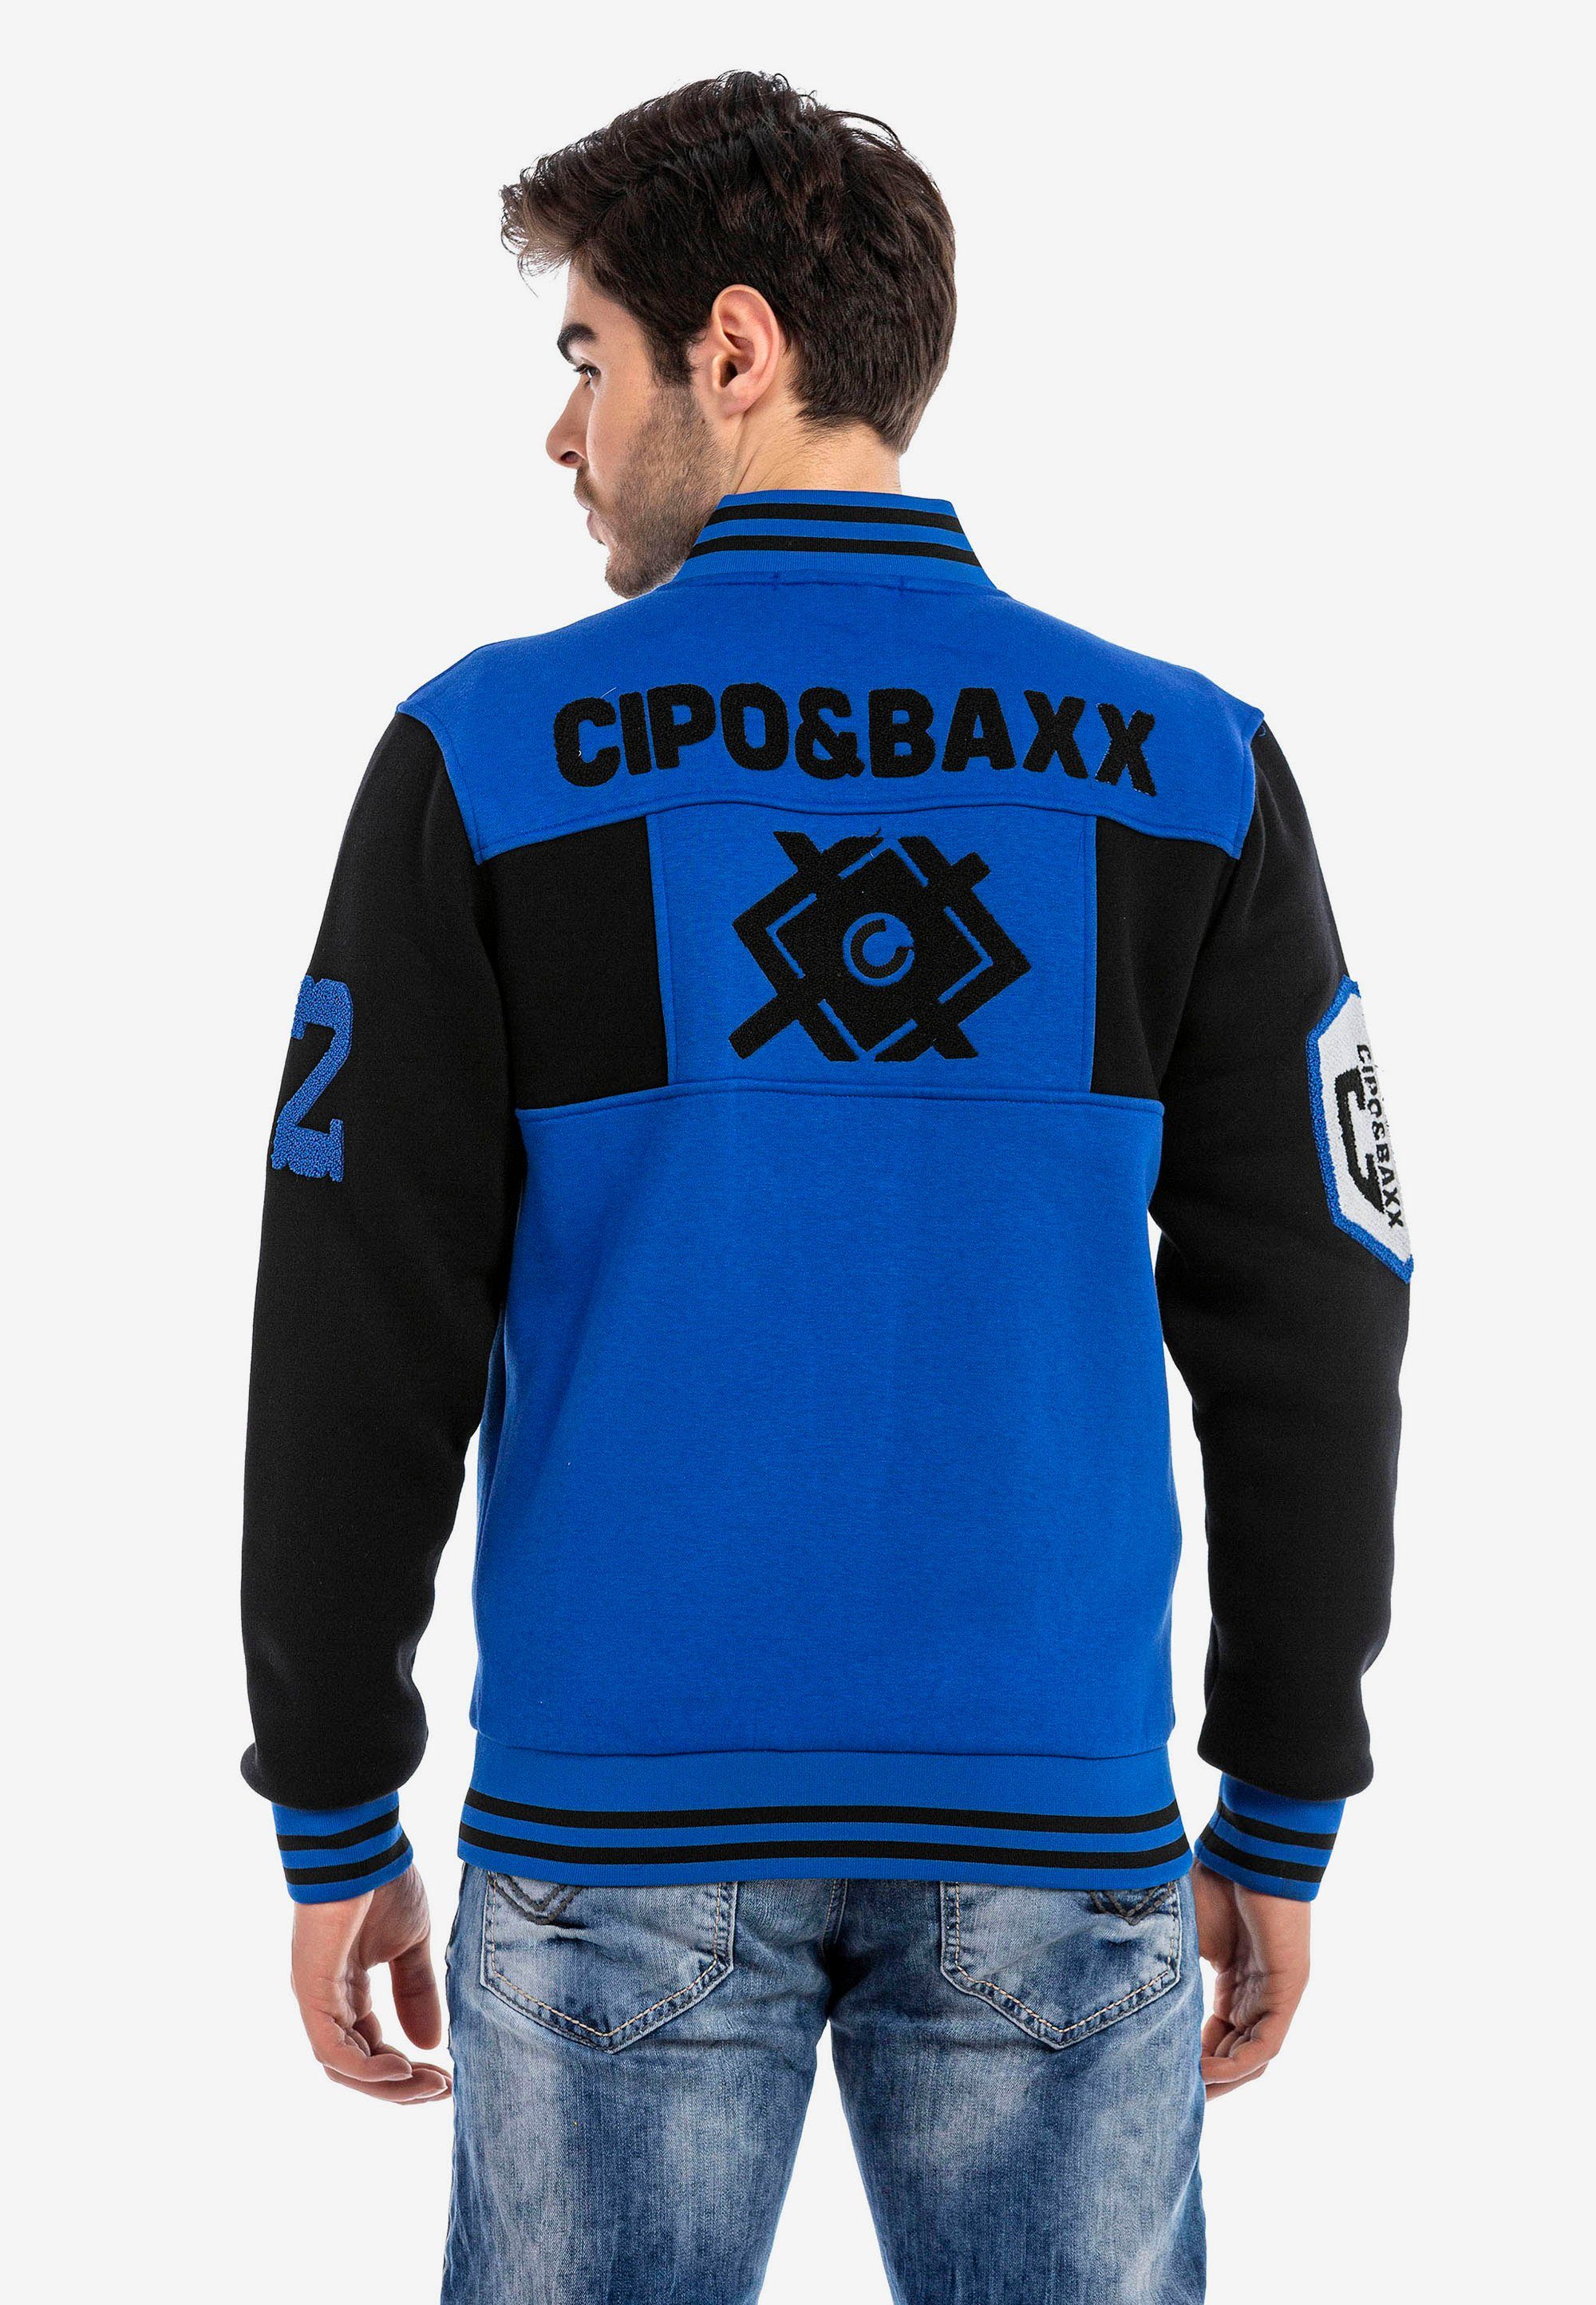 Cipo & Baxx Sweatjacke sportlichem in Design blau-schwarz